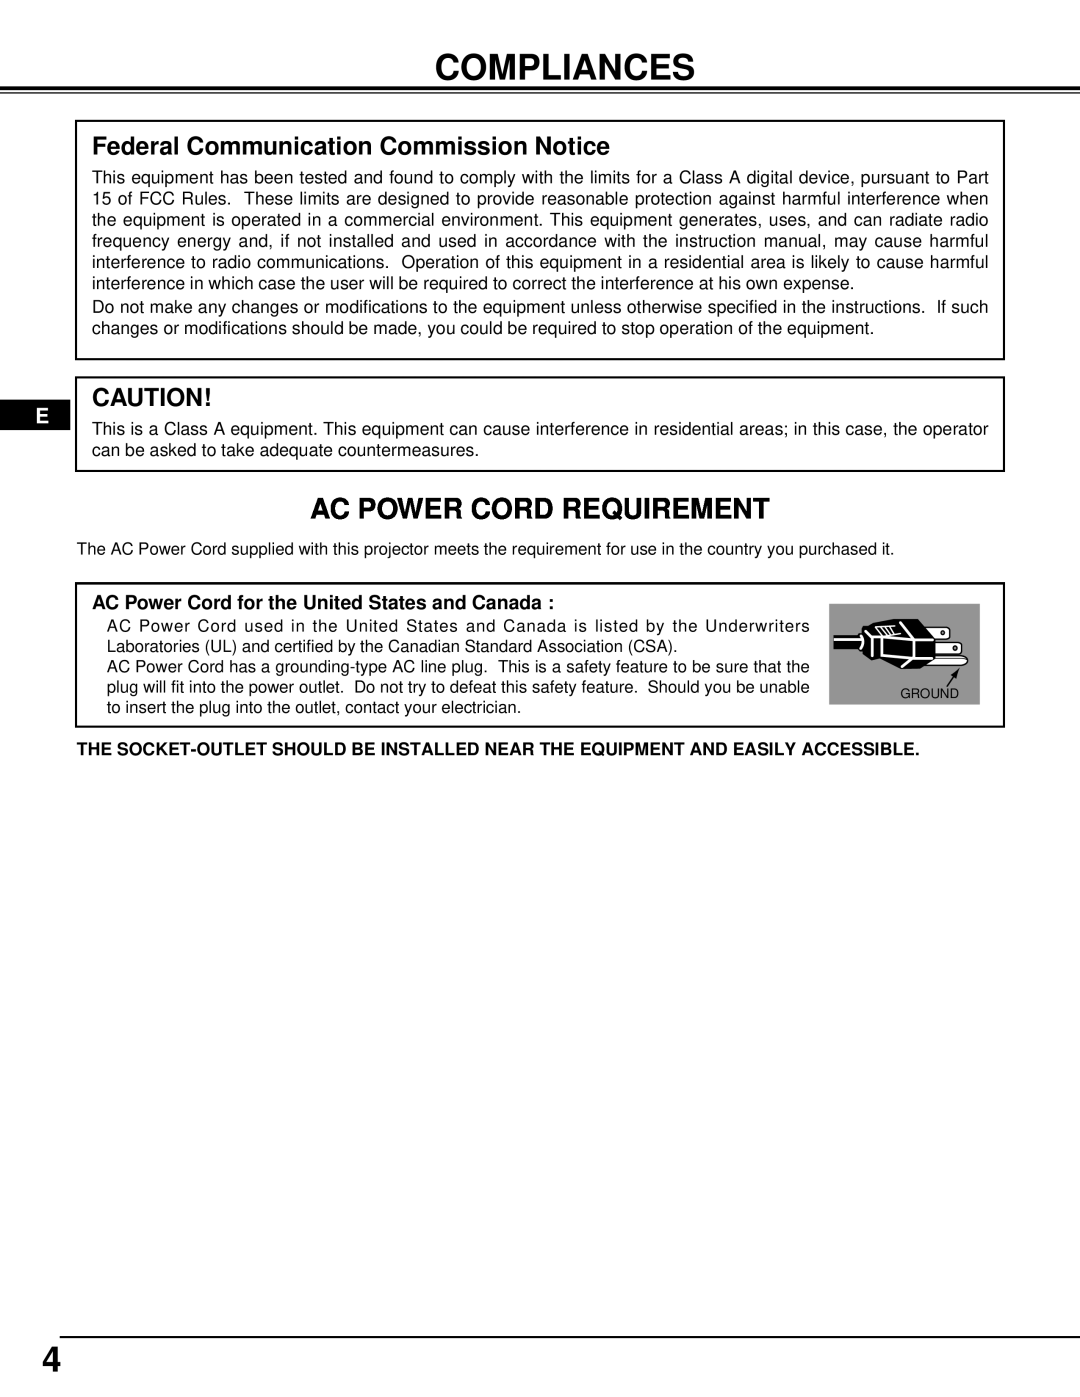 InFocus DP9295 manual Compliances, Ac Power Cord Requirement, Federal Communication Commission Notice 